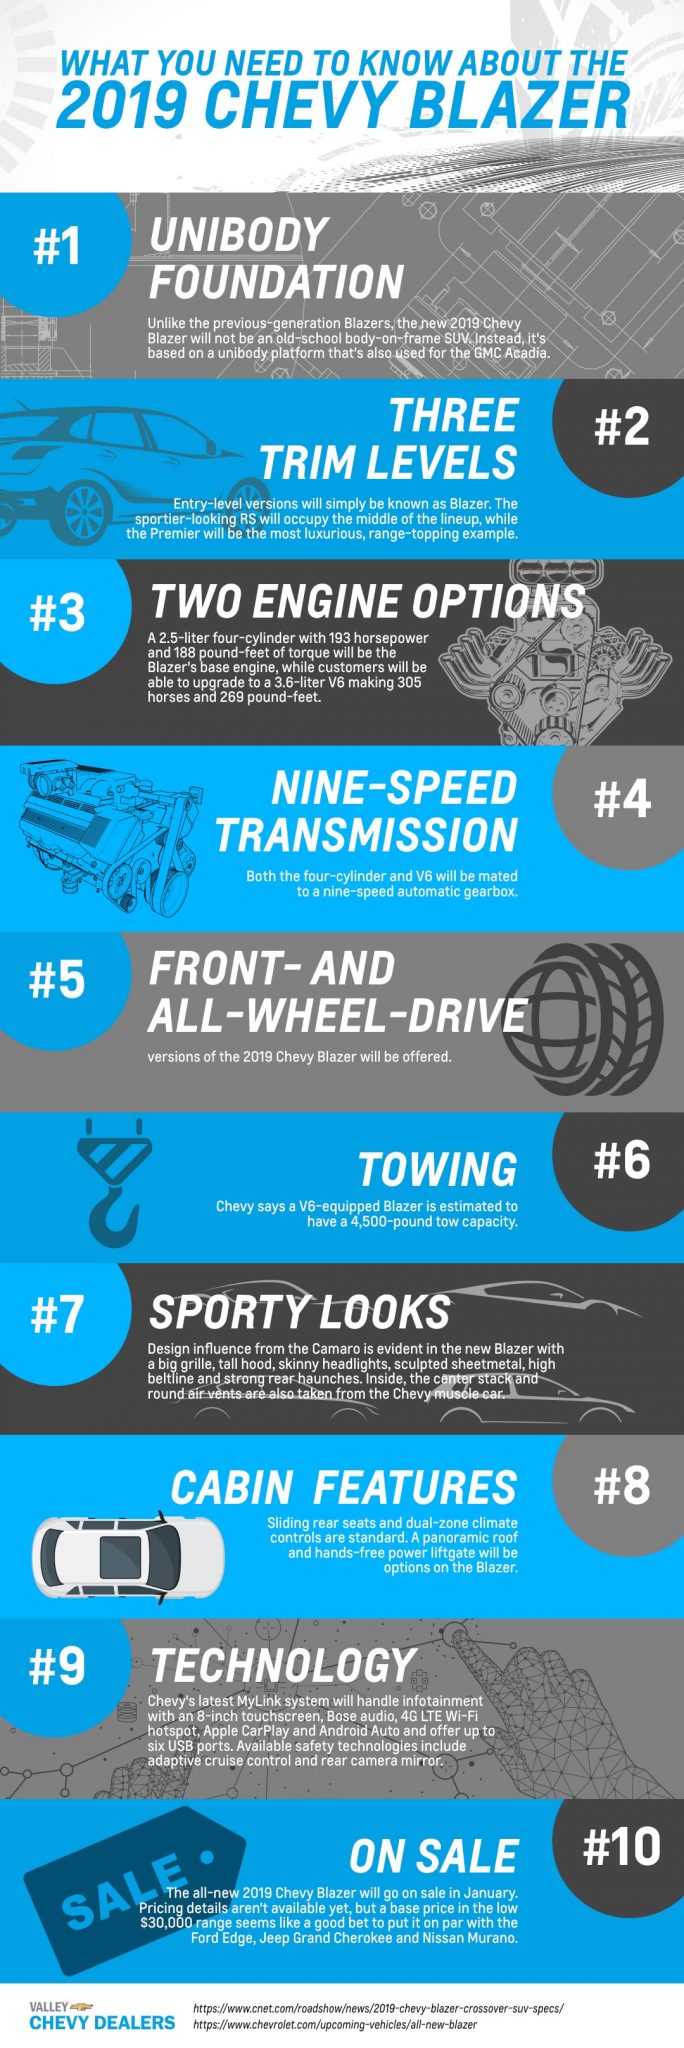 2018 Chevy Blazer Infographic